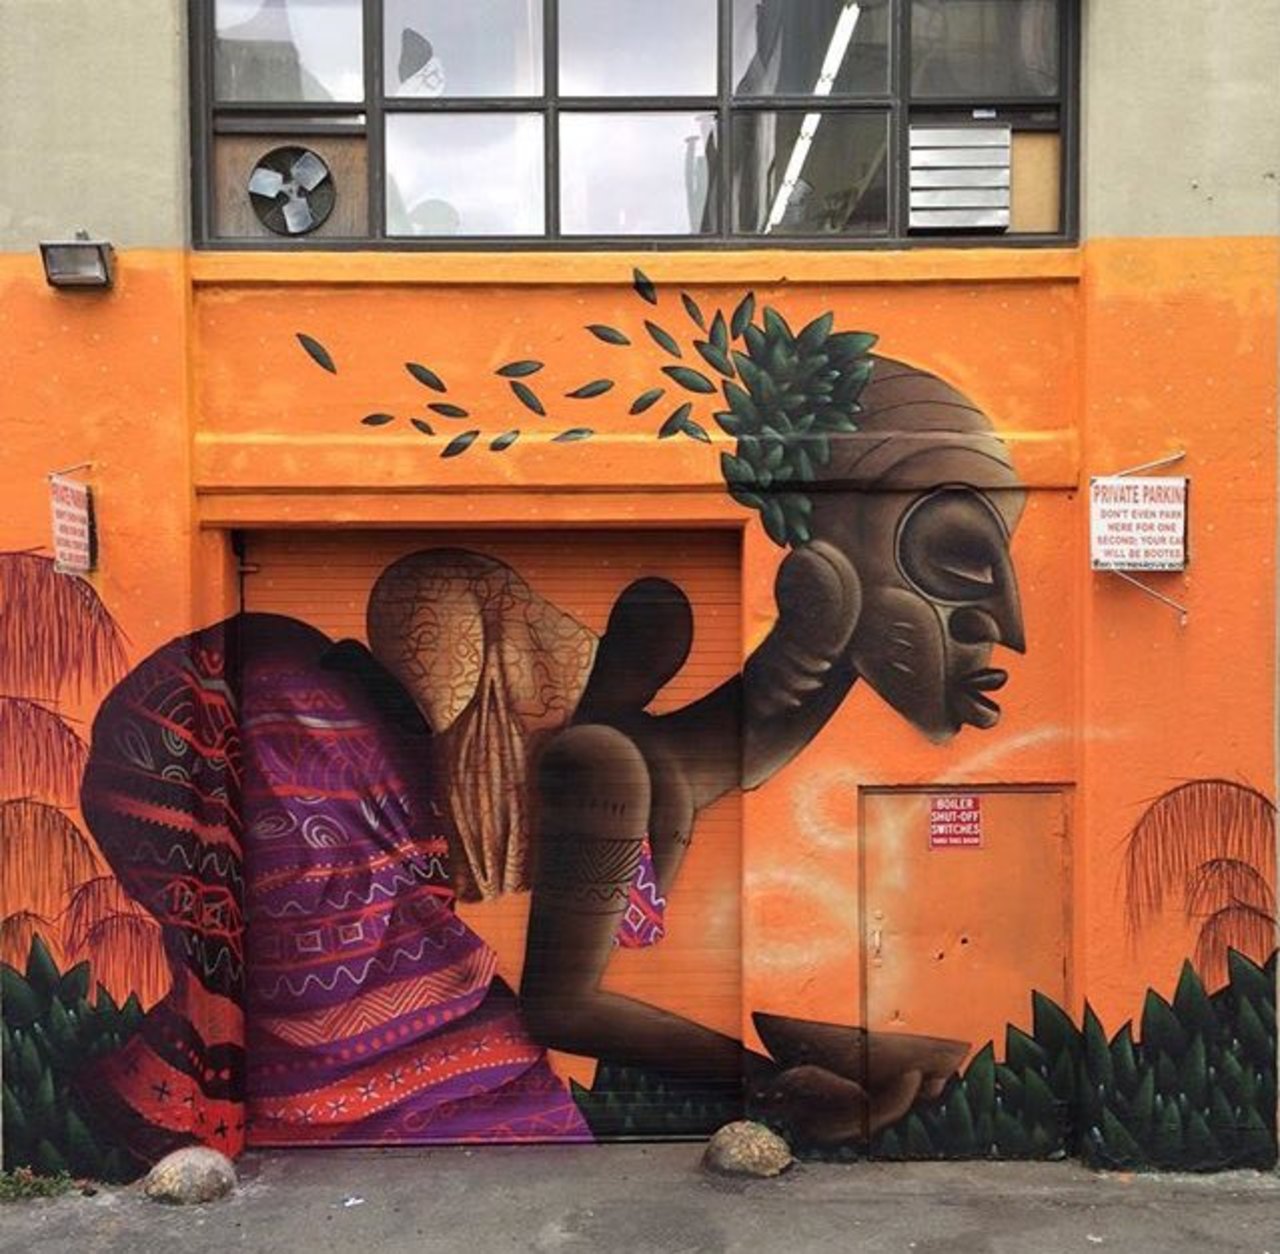 RT @JewelNiles1: New Street Art by Alexandre Keto in NYC 

#art #graffiti #mural #streetart https://t.co/Cdqwqxklbo